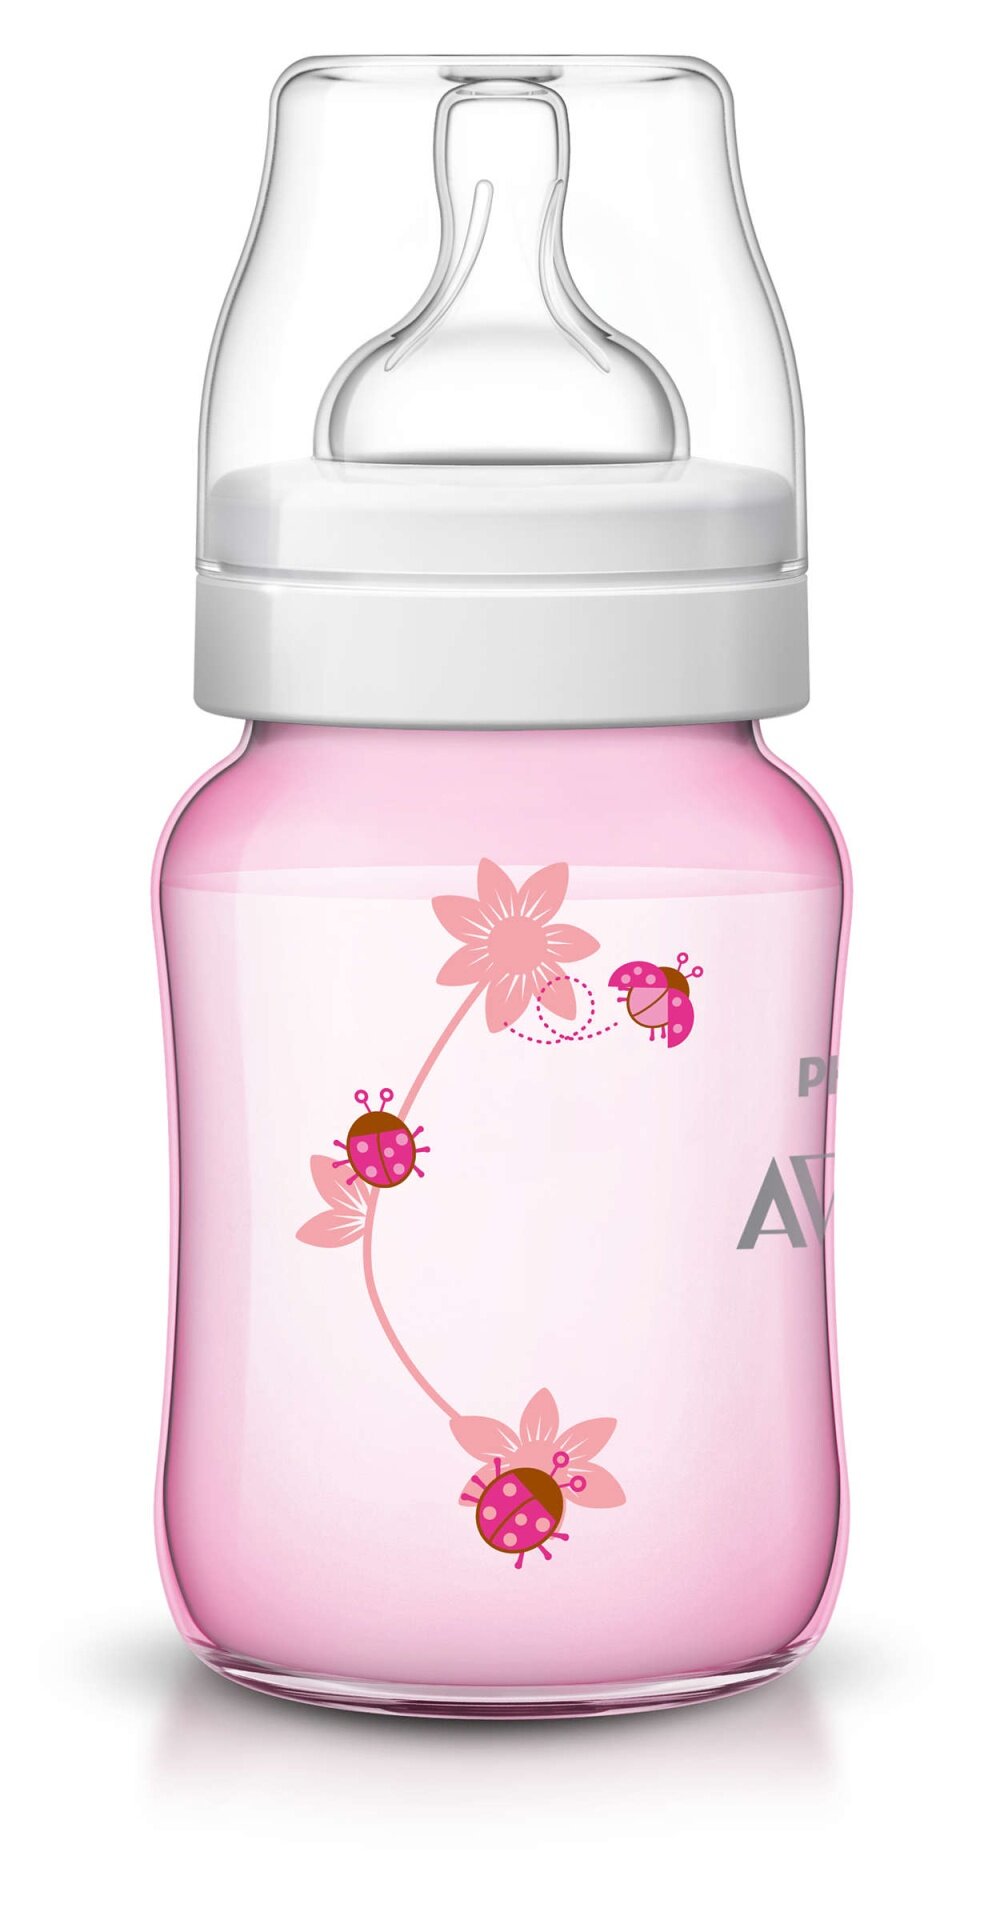 avent-classic-plus-blue-pink-flower-bottle-9oz-twin-pack-www.aventstore.com.my-2-.jpg